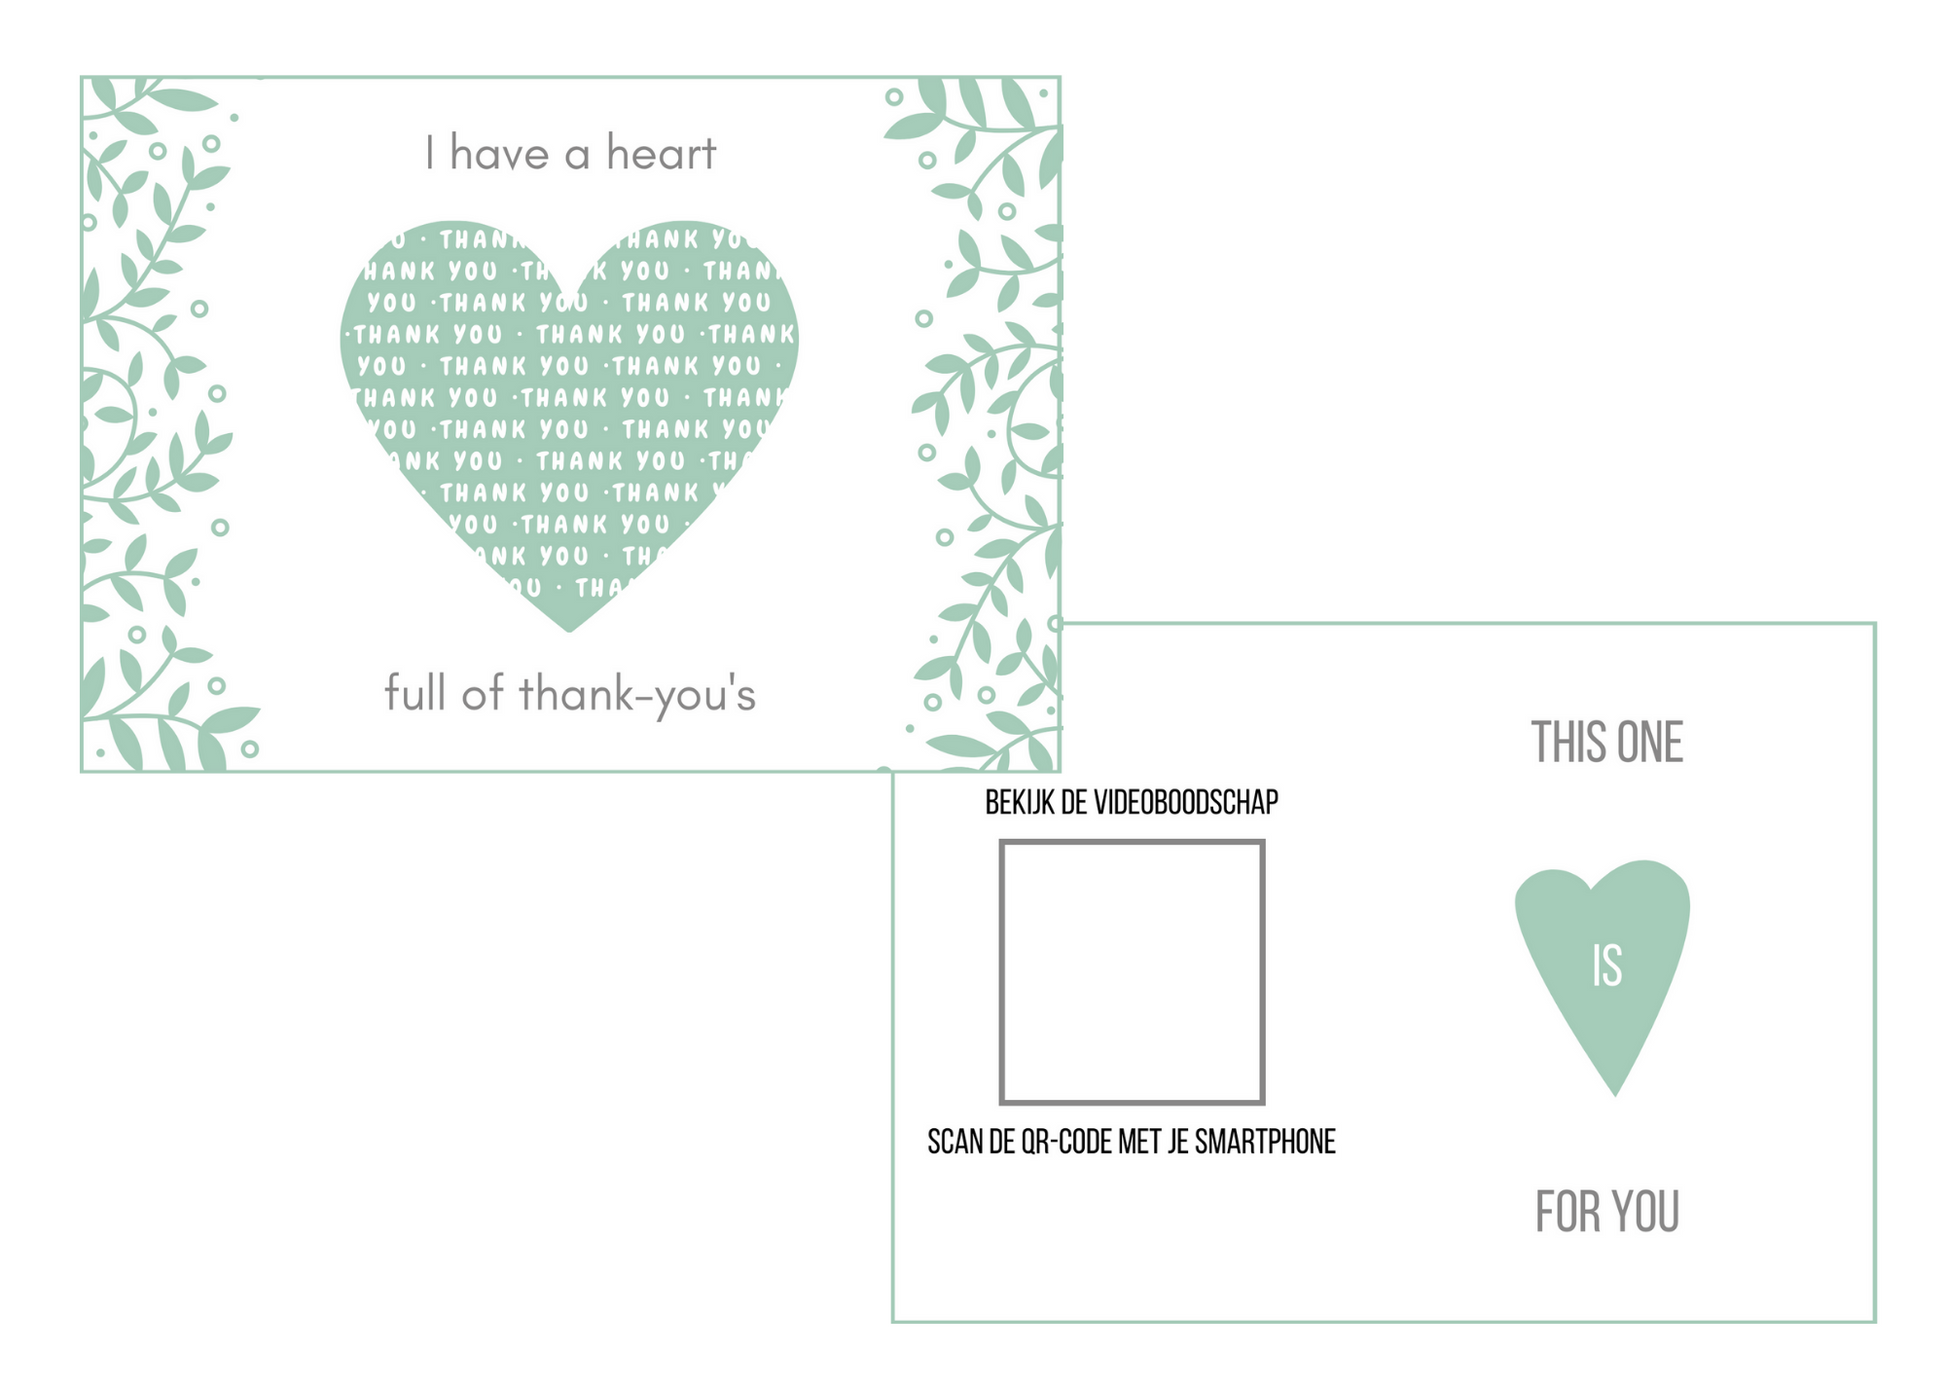 Kaart met videoboodschap: a heart full of thankyous - bedankkaart